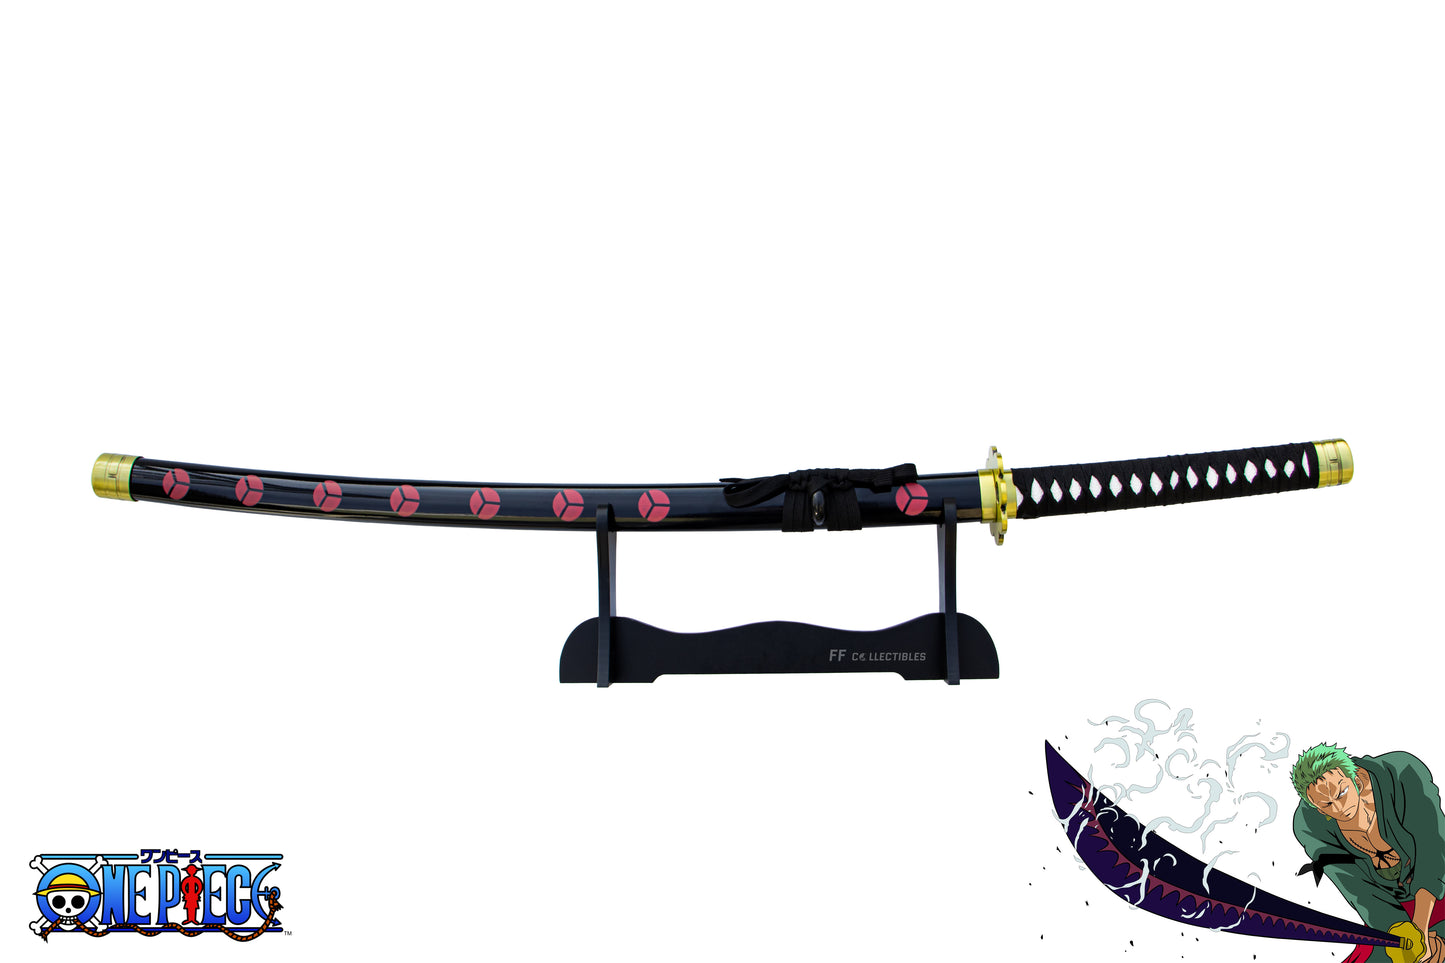 ONE PIECE – SHUSUI, THE SWORD OF RORONOA ZORO (w FREE sword stand)